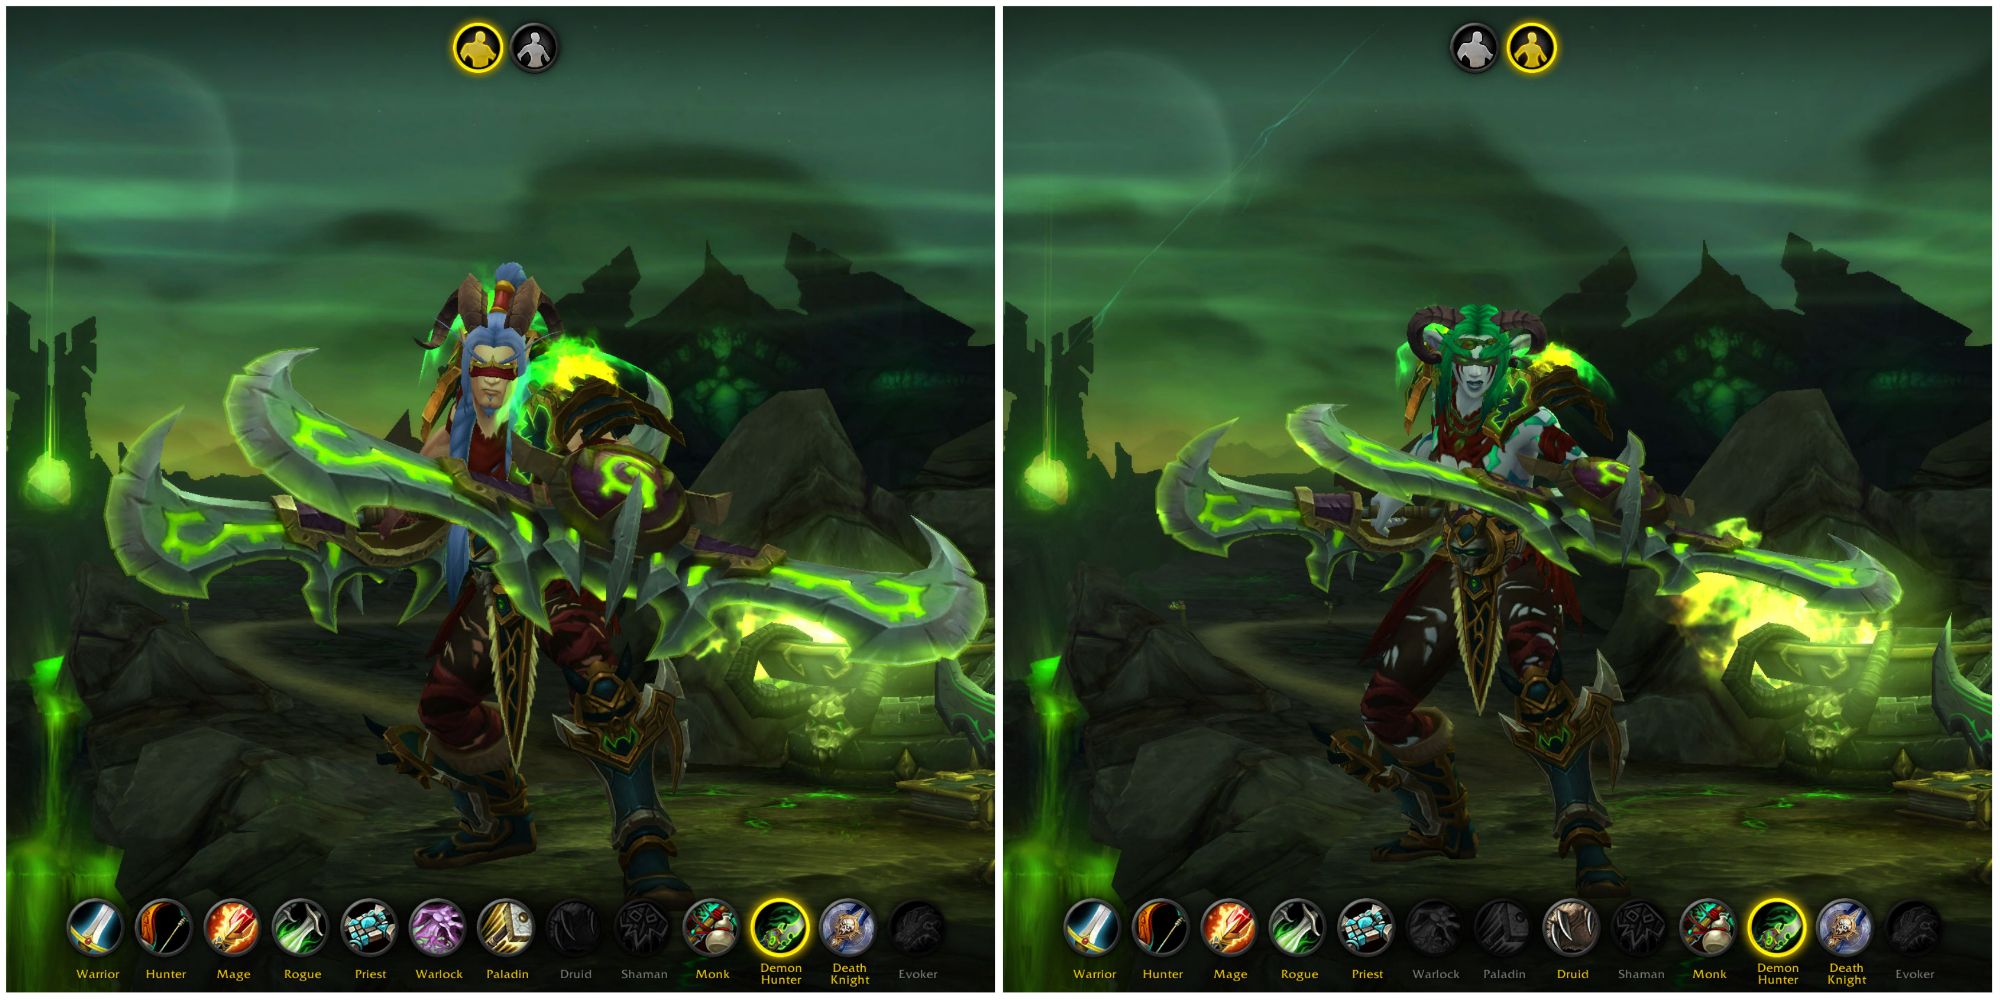 World of Warcraft split image of blood elf and night elf Demon hunter character creation screens